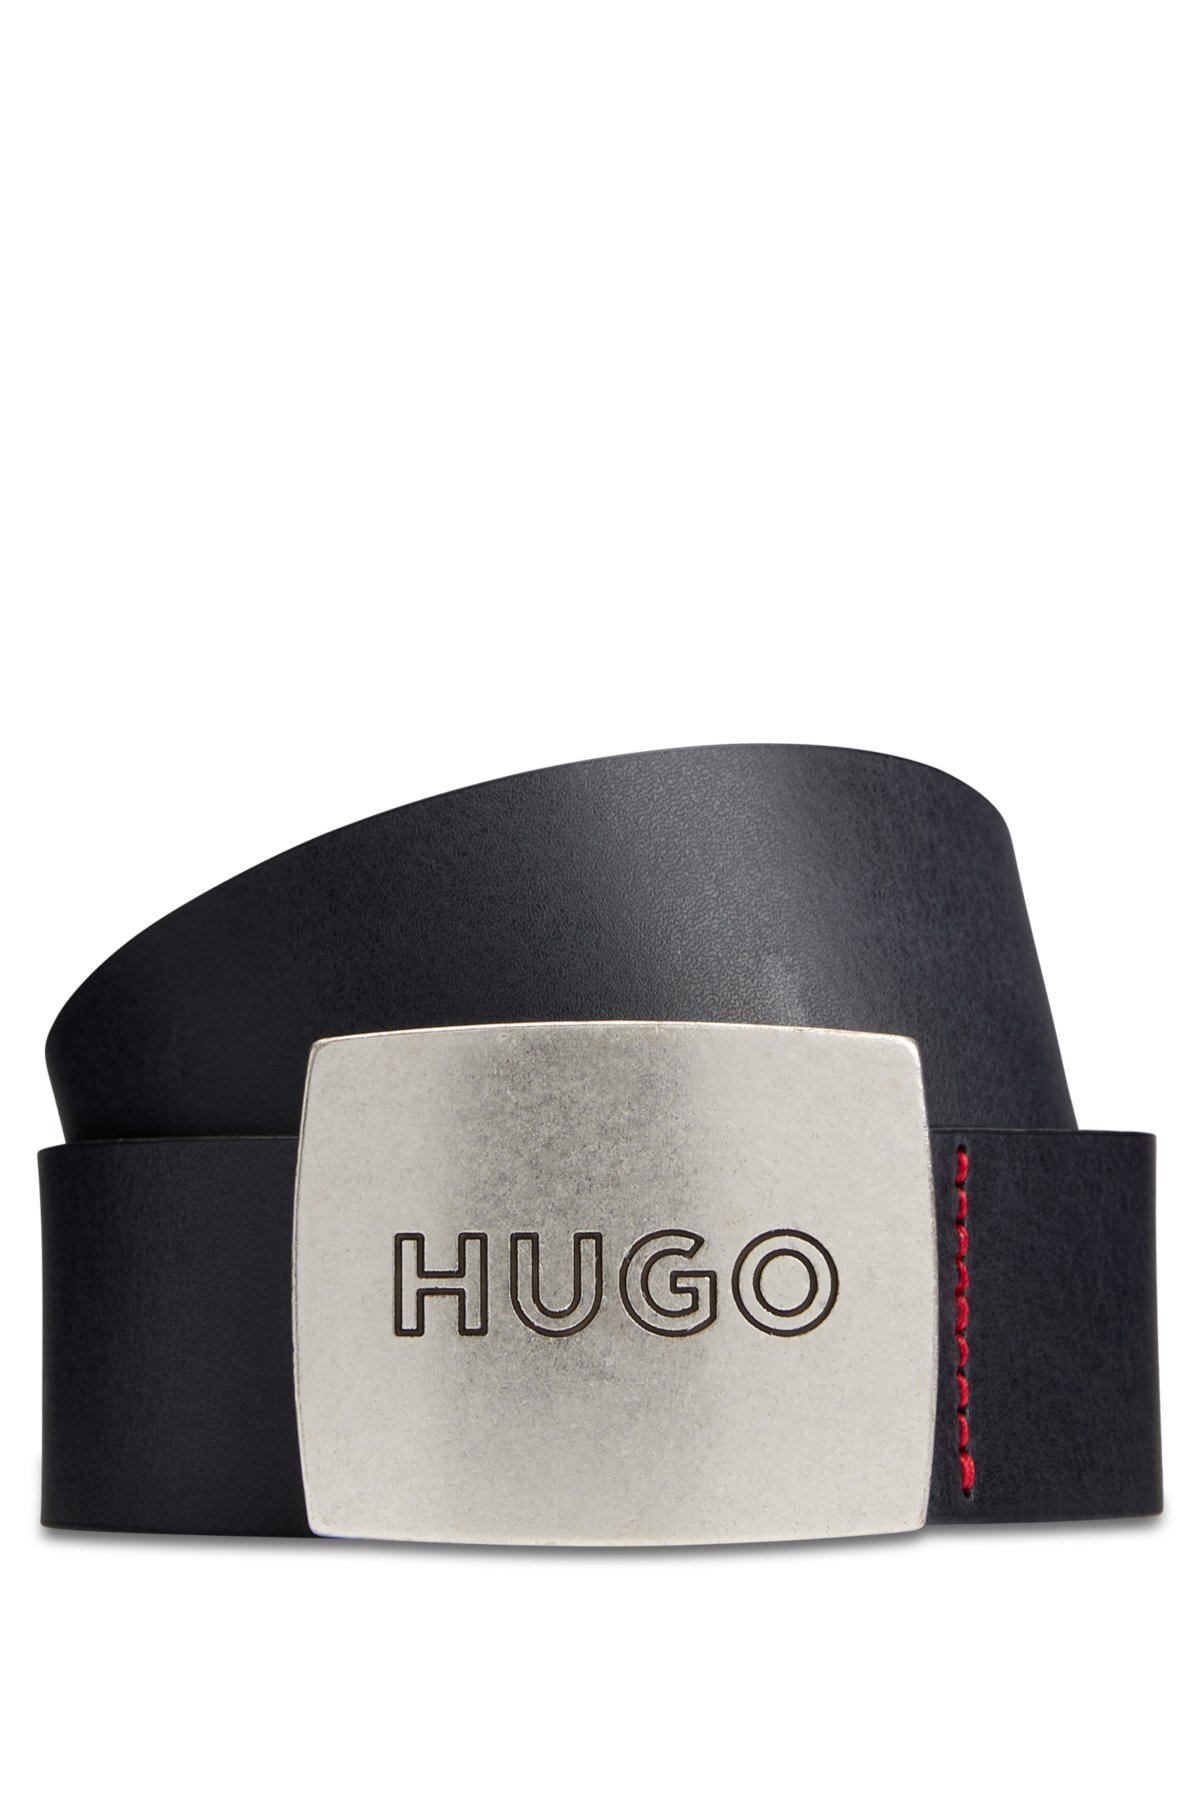 HUGO - Koppelschließe mit Ledergürtel Logo der auf